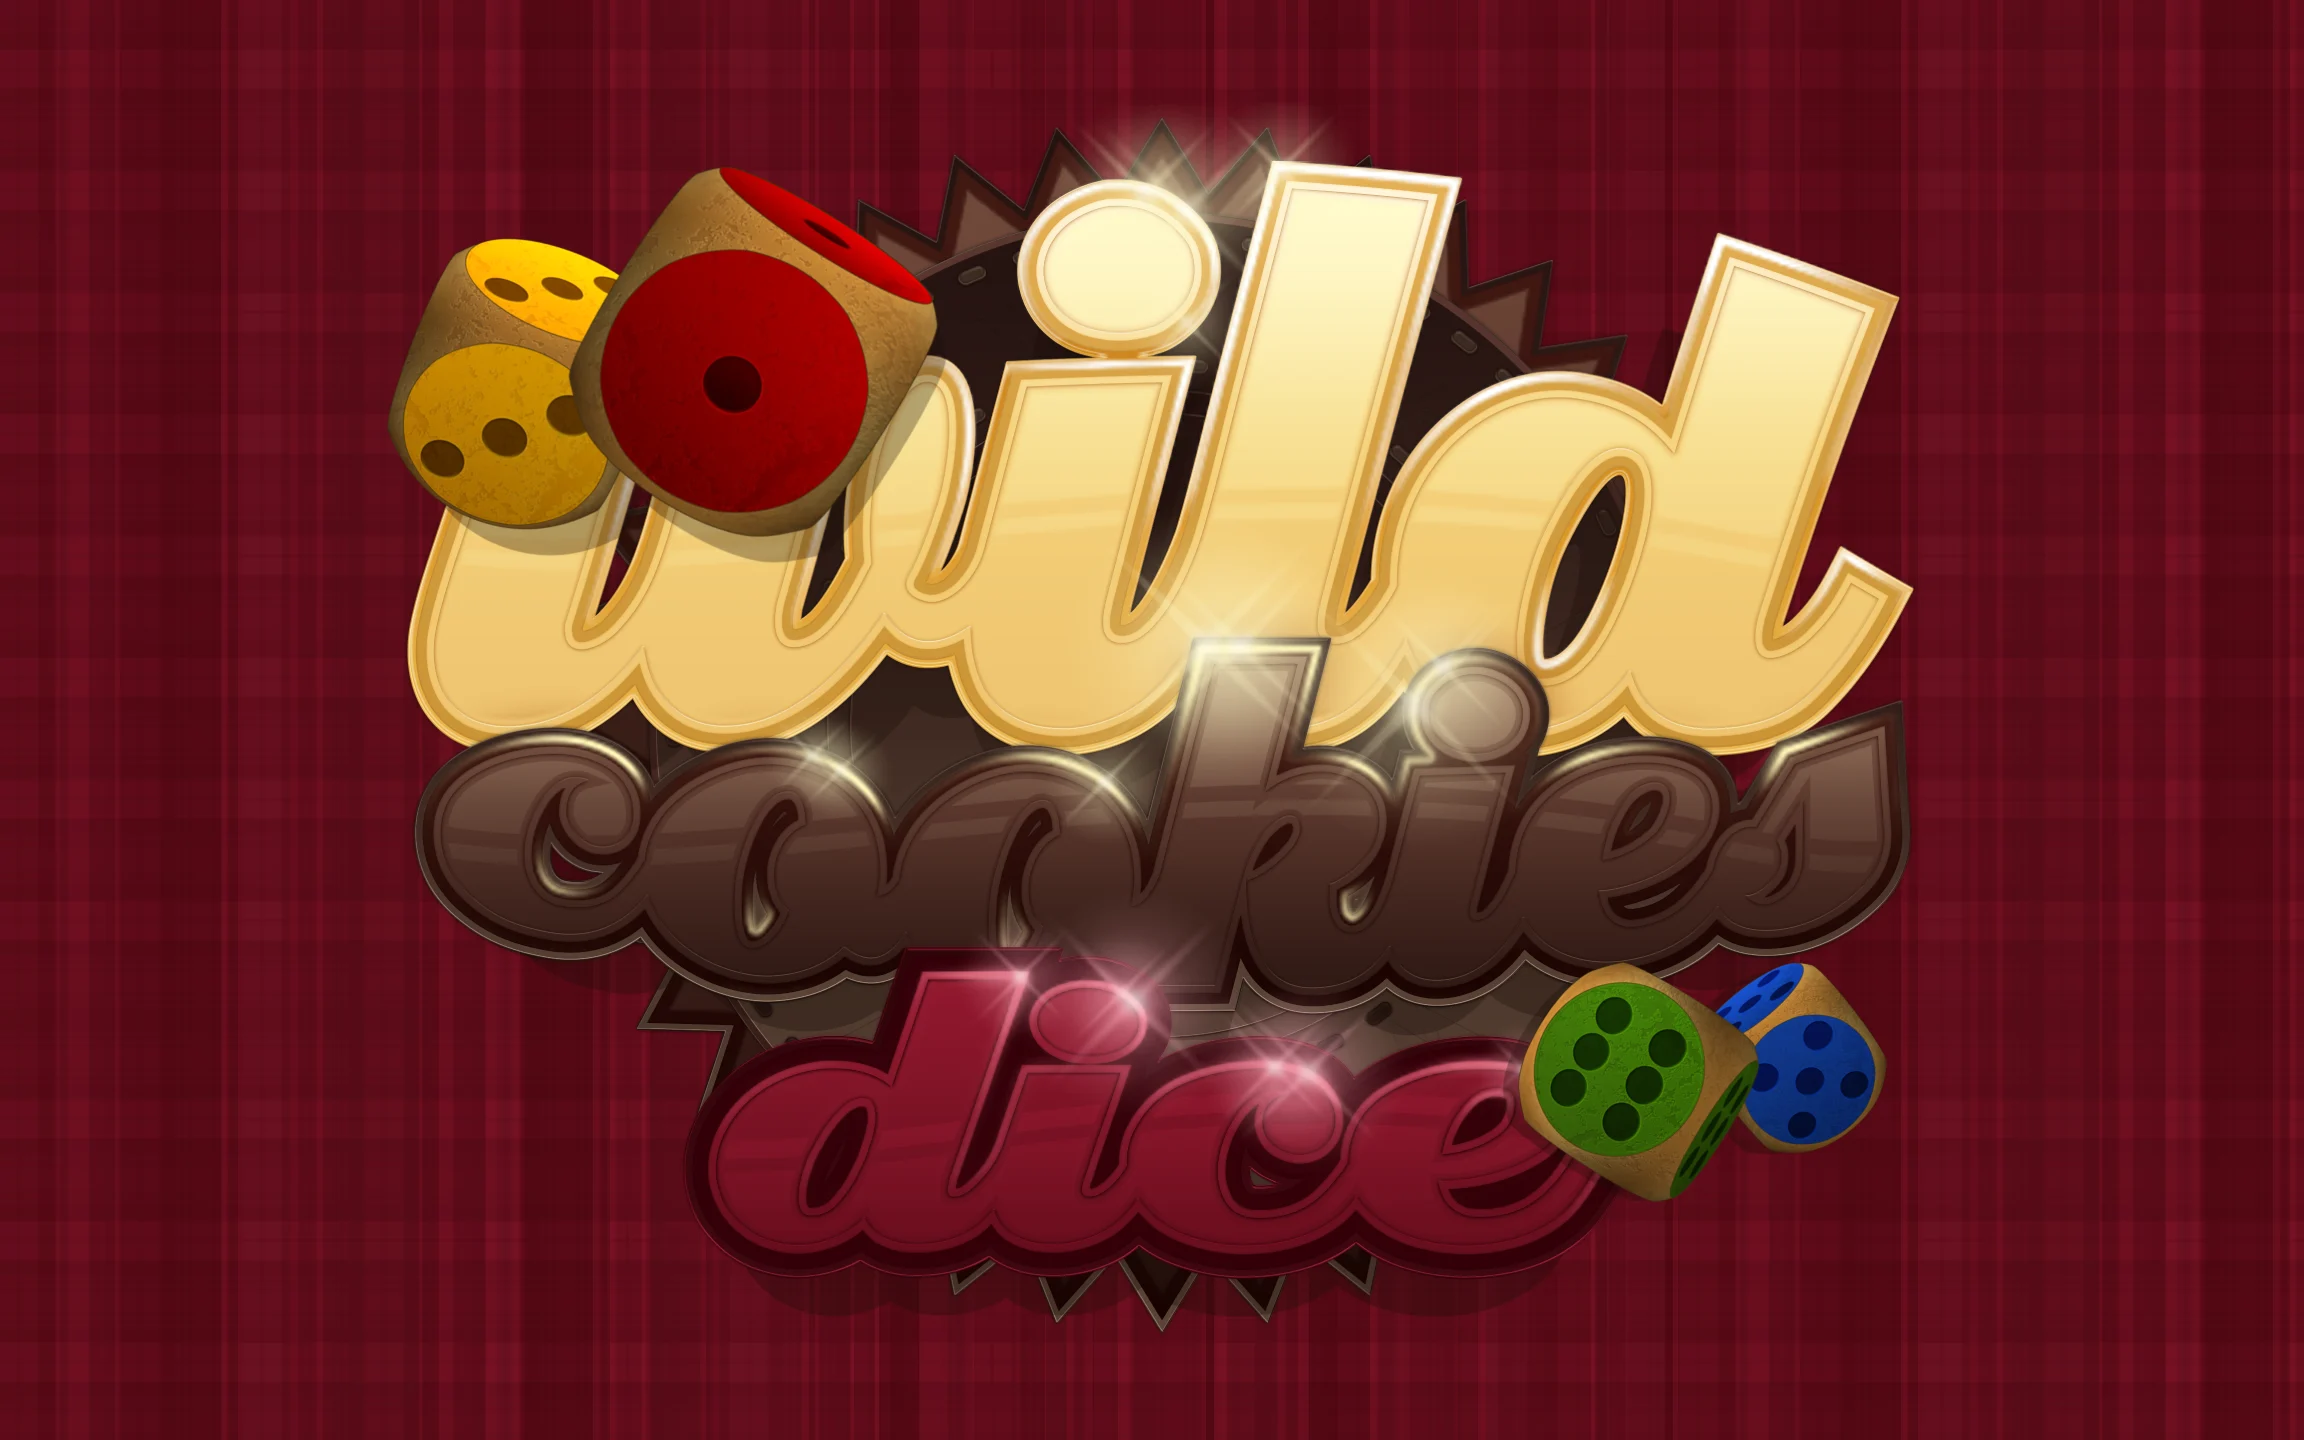 Play Wild Cookies Dice on Starcasino.be online casino